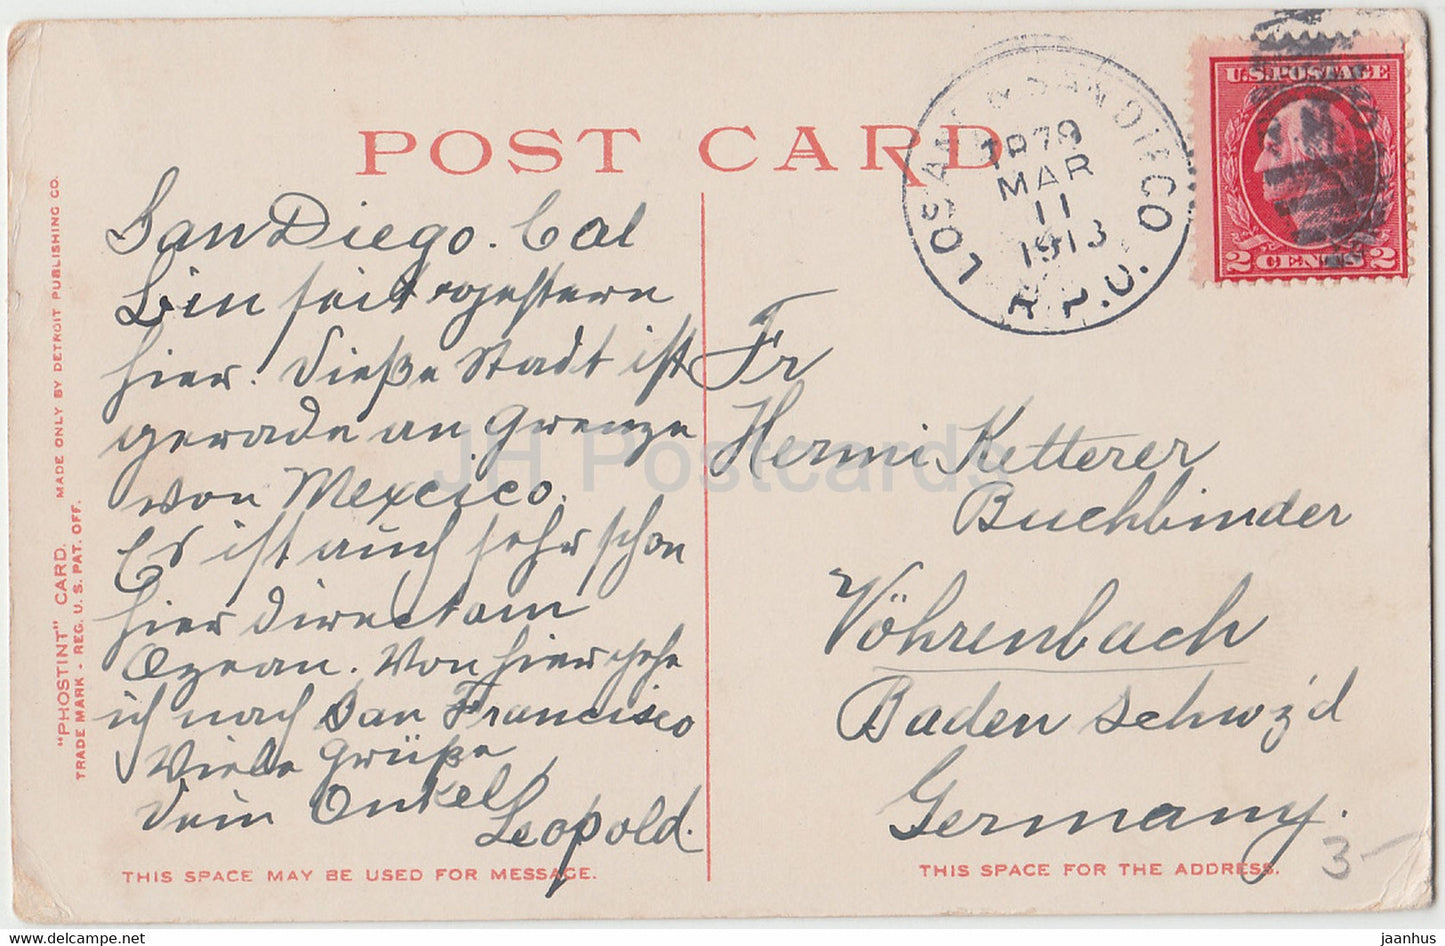 San Diego - Mission Heights Pavilion - California - 12785 - old postcard - 1913 - United States USA - used